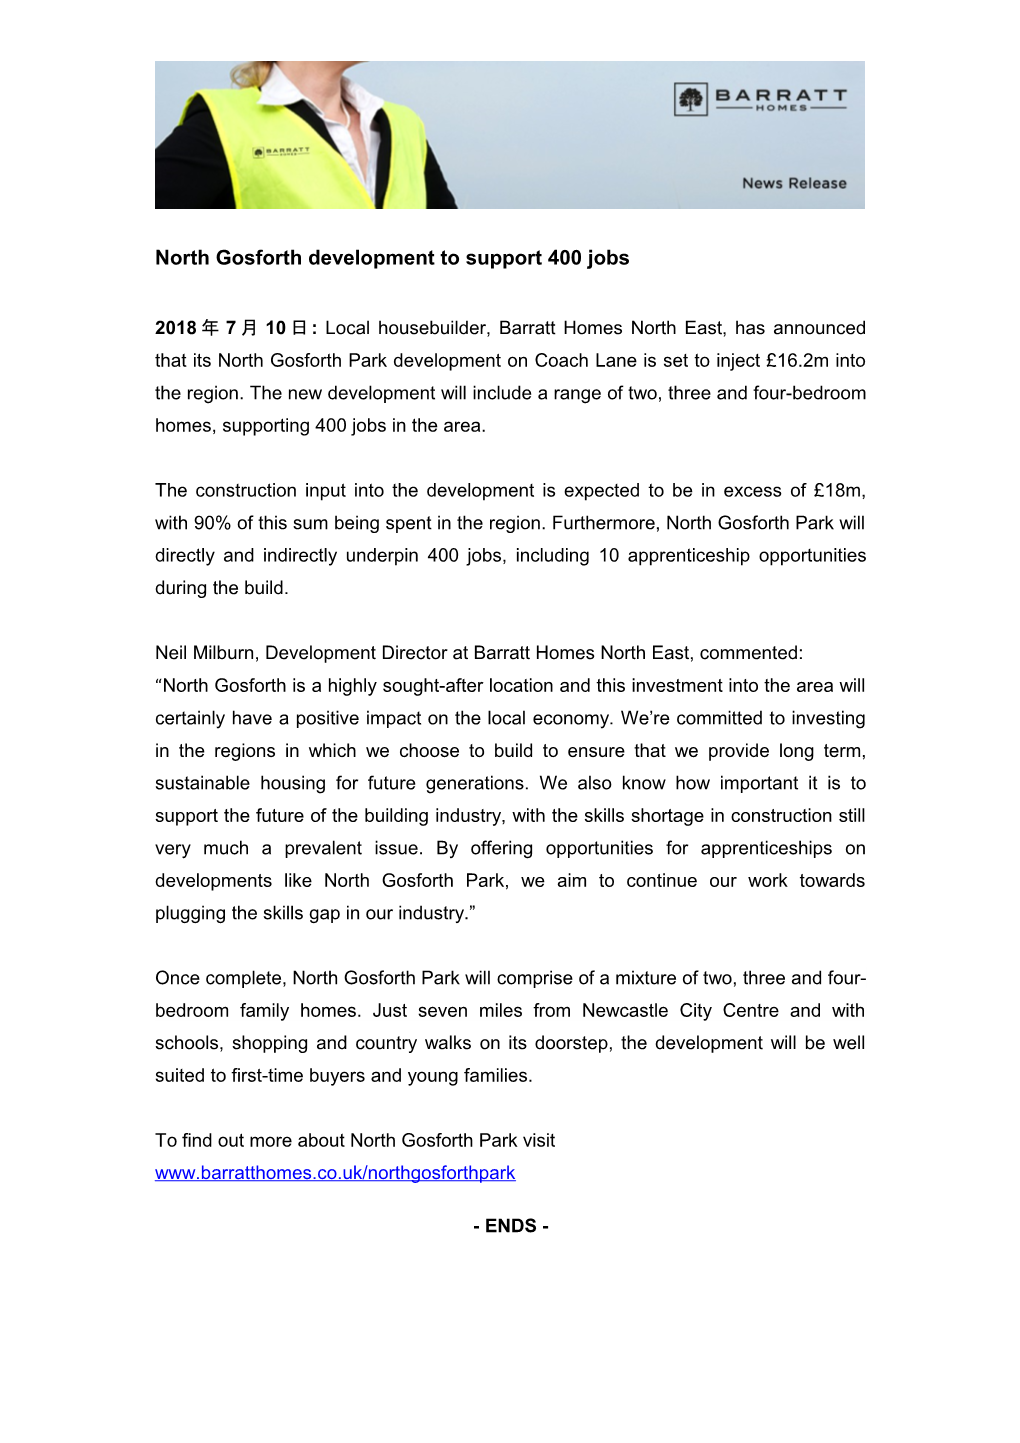 North Gosforth Development to Support 400 Jobs